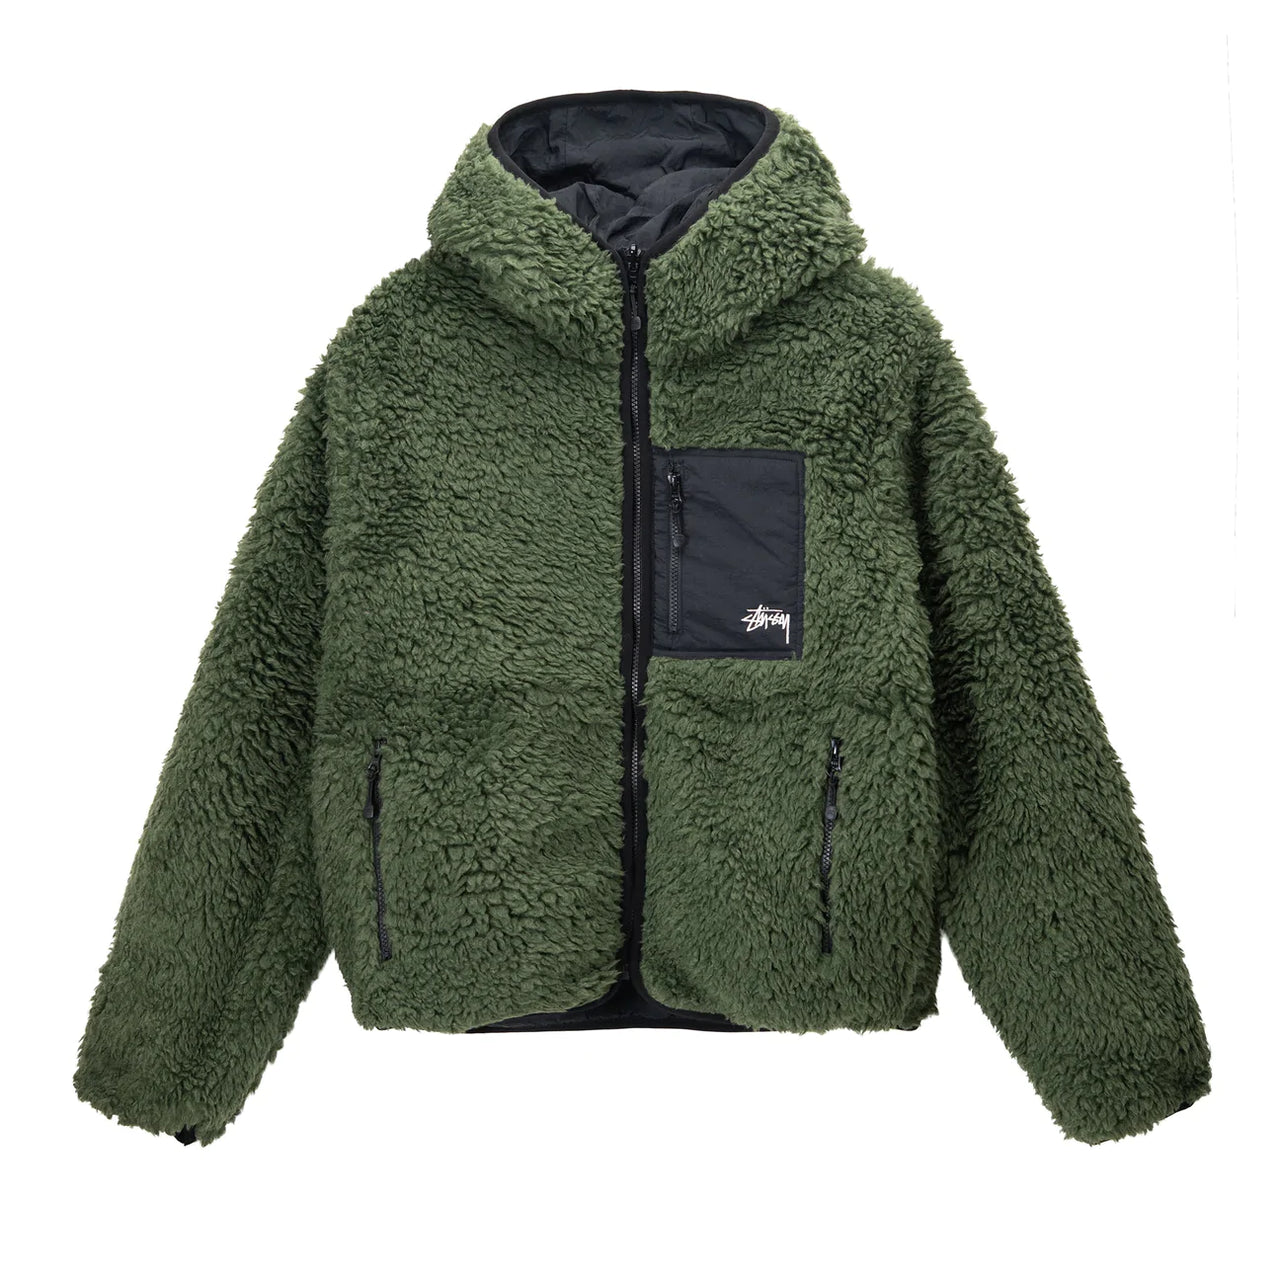 Sherpa Jacket Olive